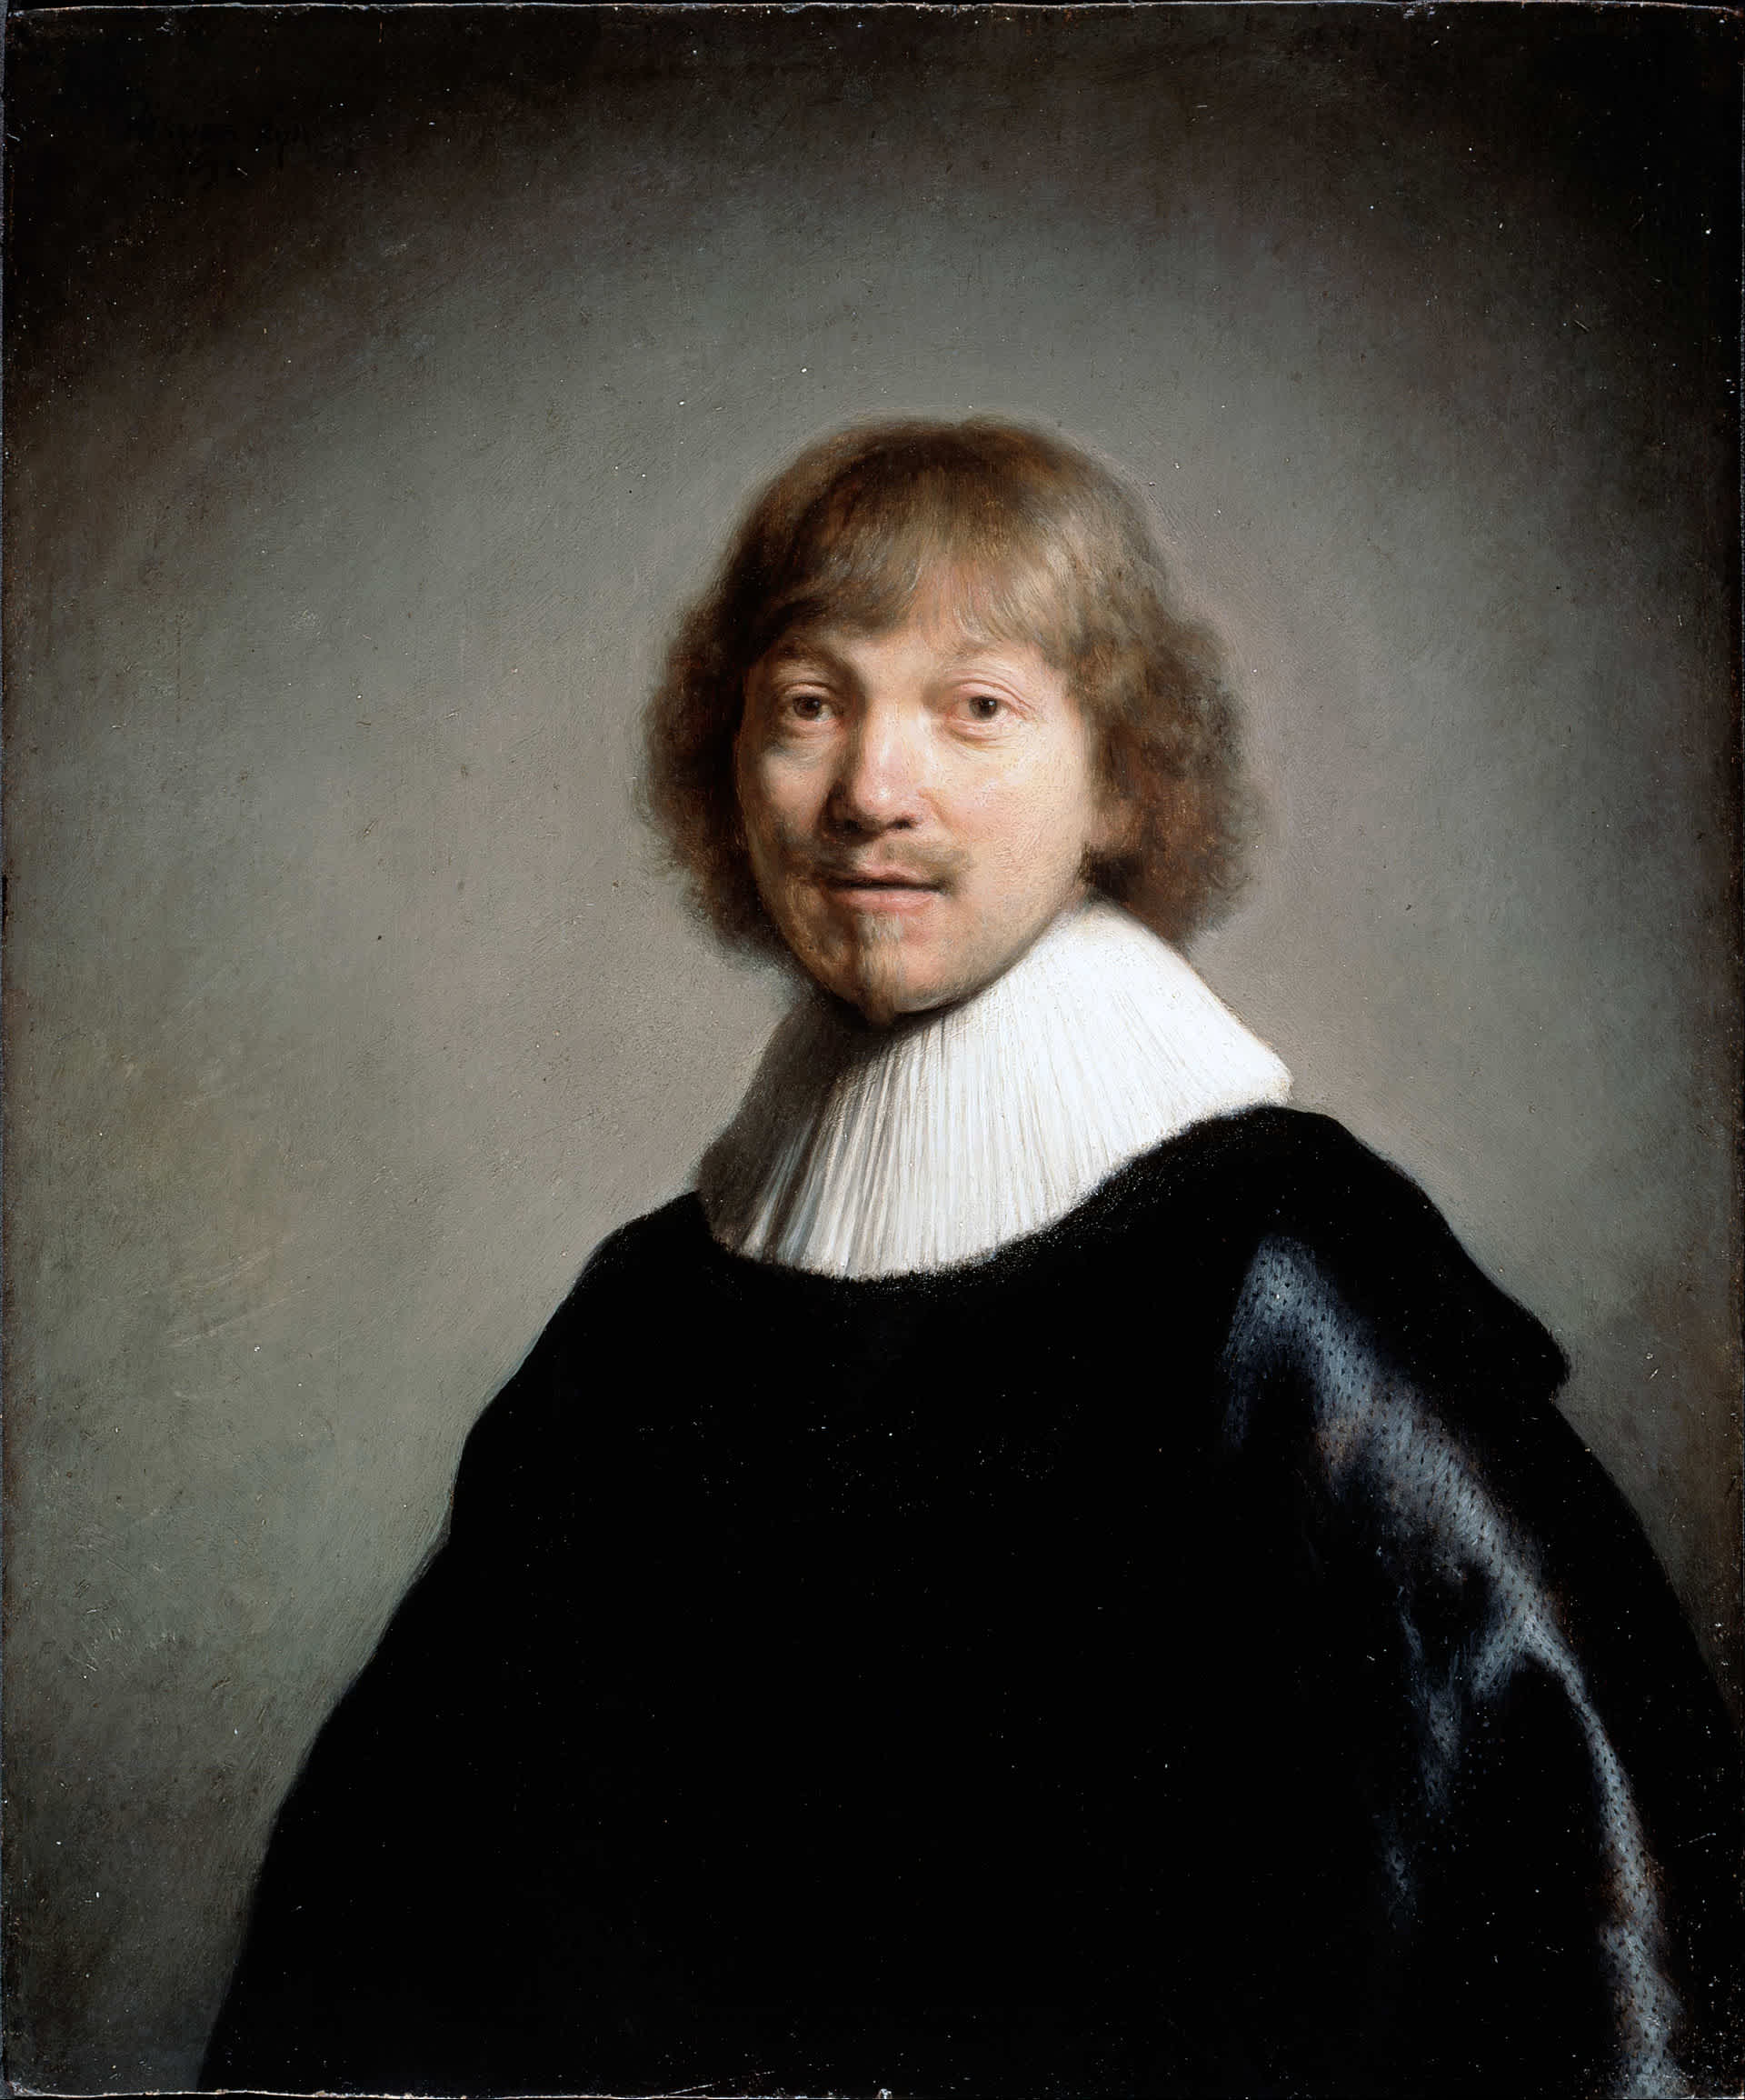 Rembrandt portrait of Jacob III de Gheyn sourced from Google art project